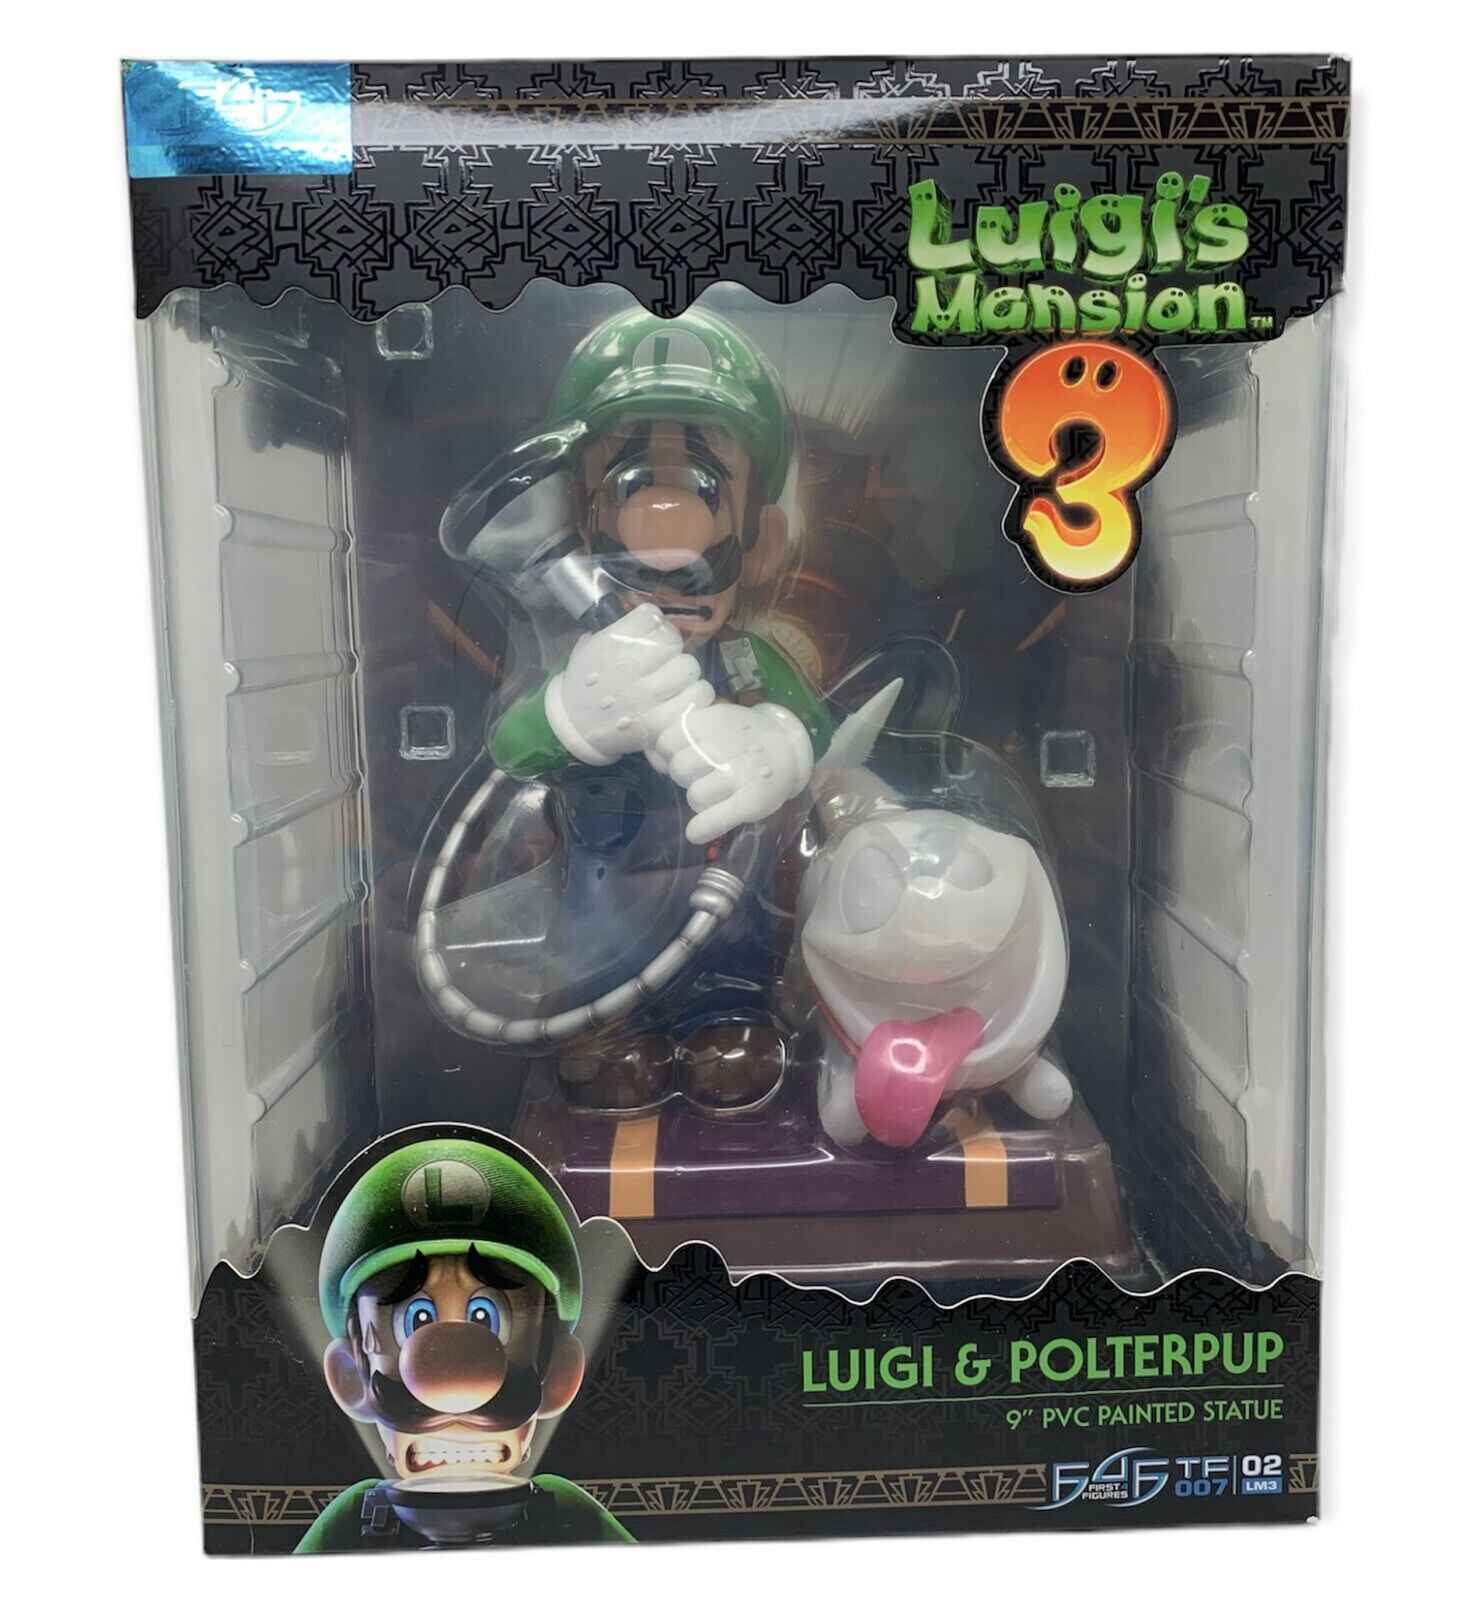 Luigi's Mansion 3 - Luigi & Polterpup 9'' PVC Painted Statue (F4F